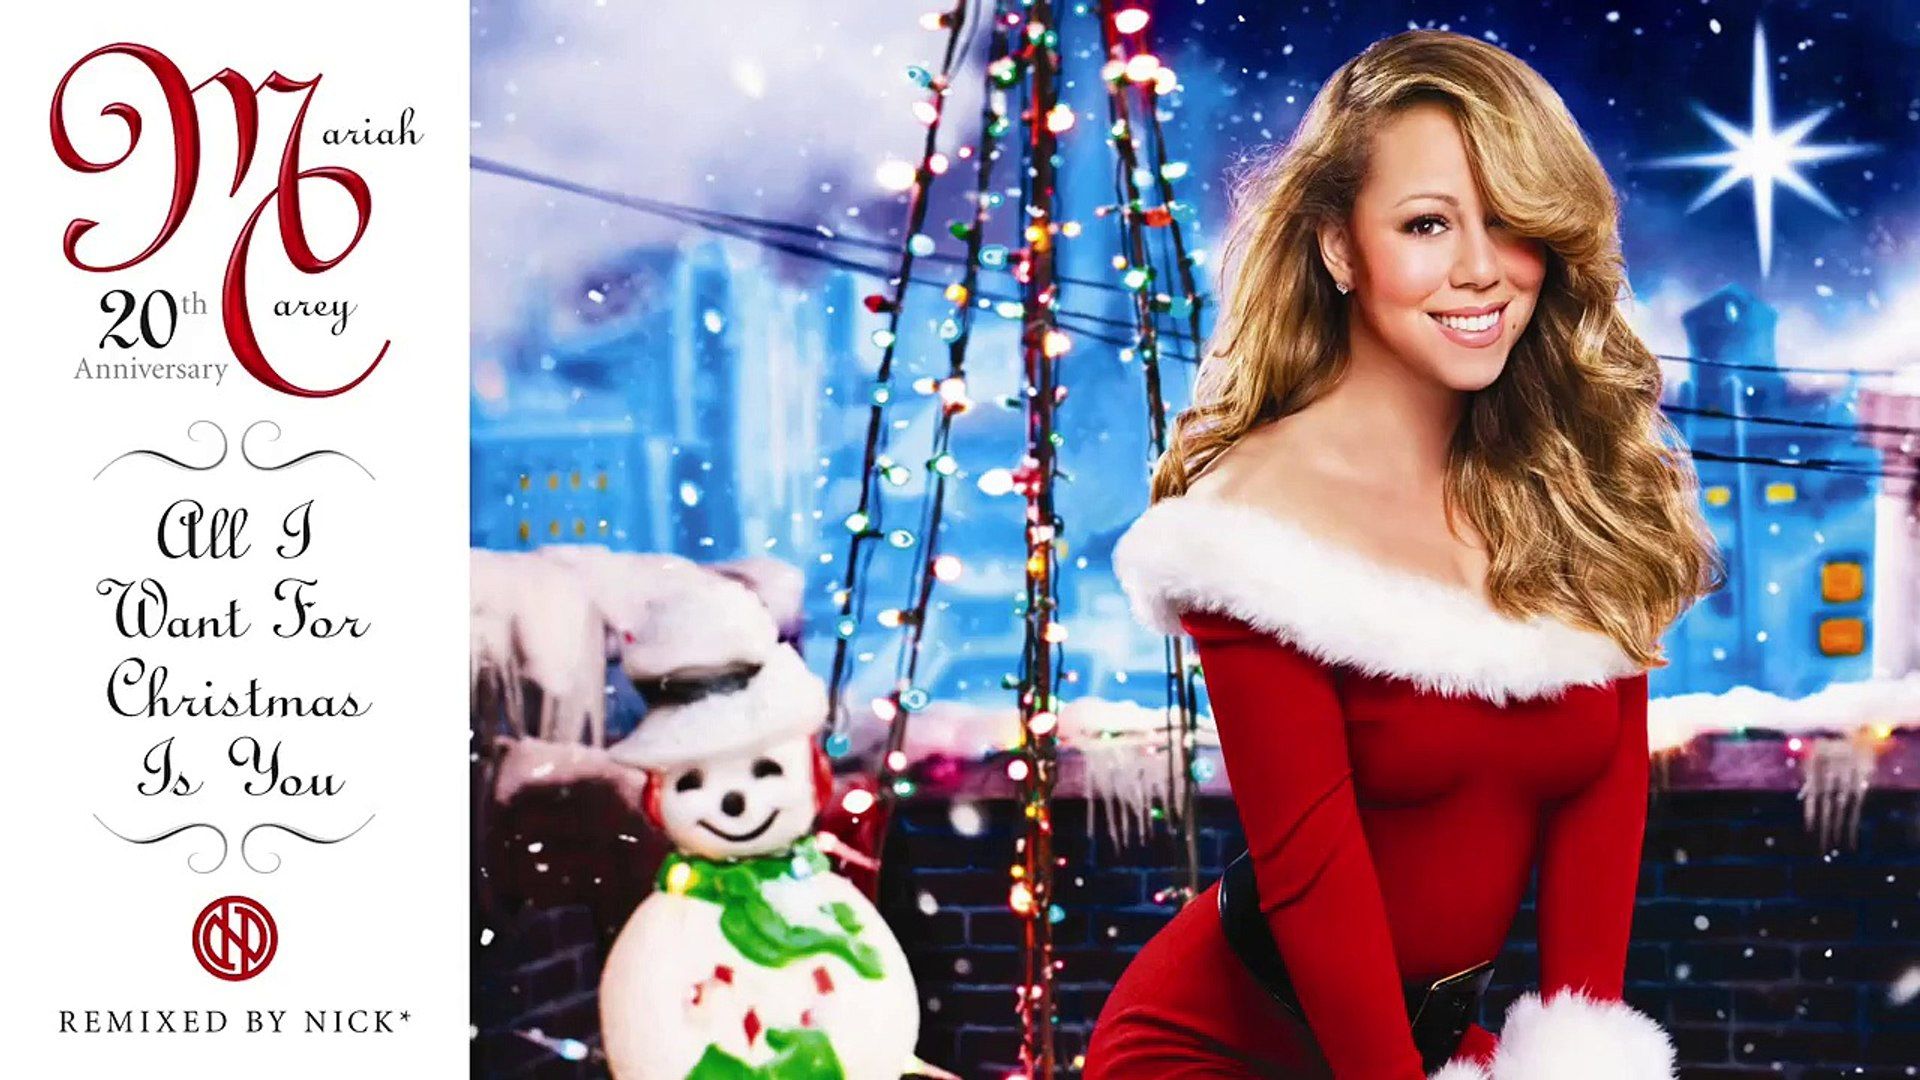 Mariah Carey Christmas Funny